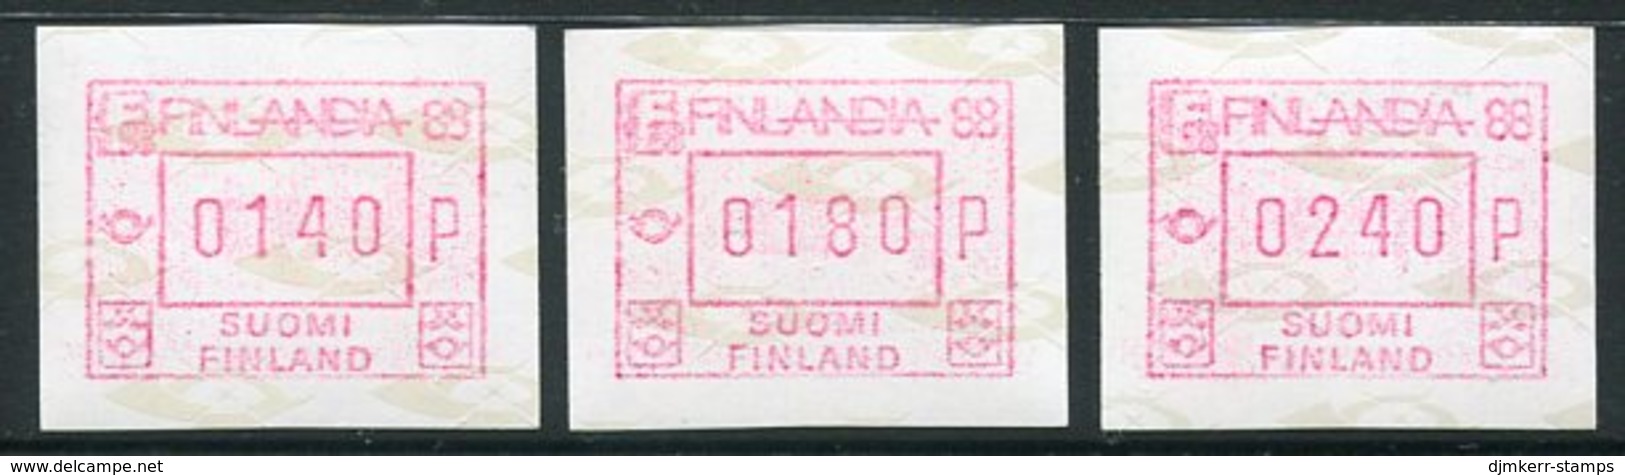 FINLAND 1986 FINLANDIA '88  ATM, Three Values MNH / **..  Michel 2 - Viñetas De Franqueo [ATM]